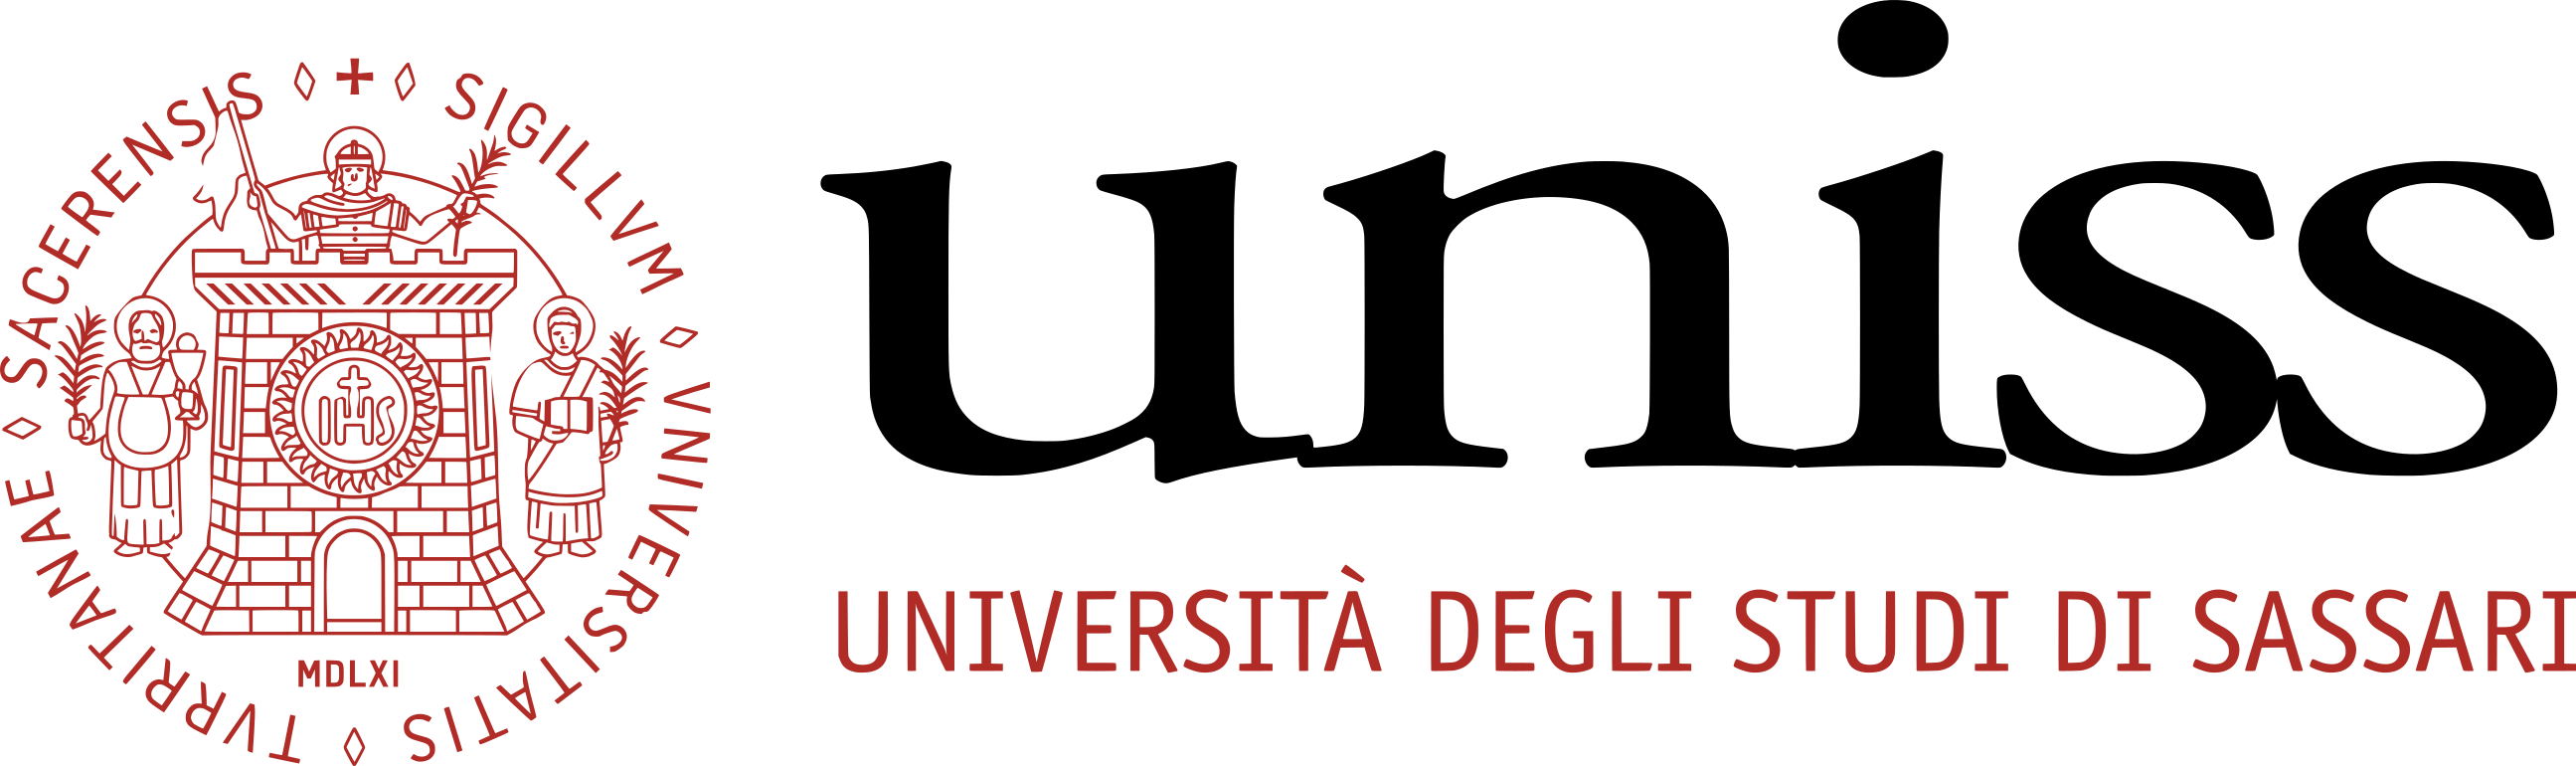 Università di Sassari logo